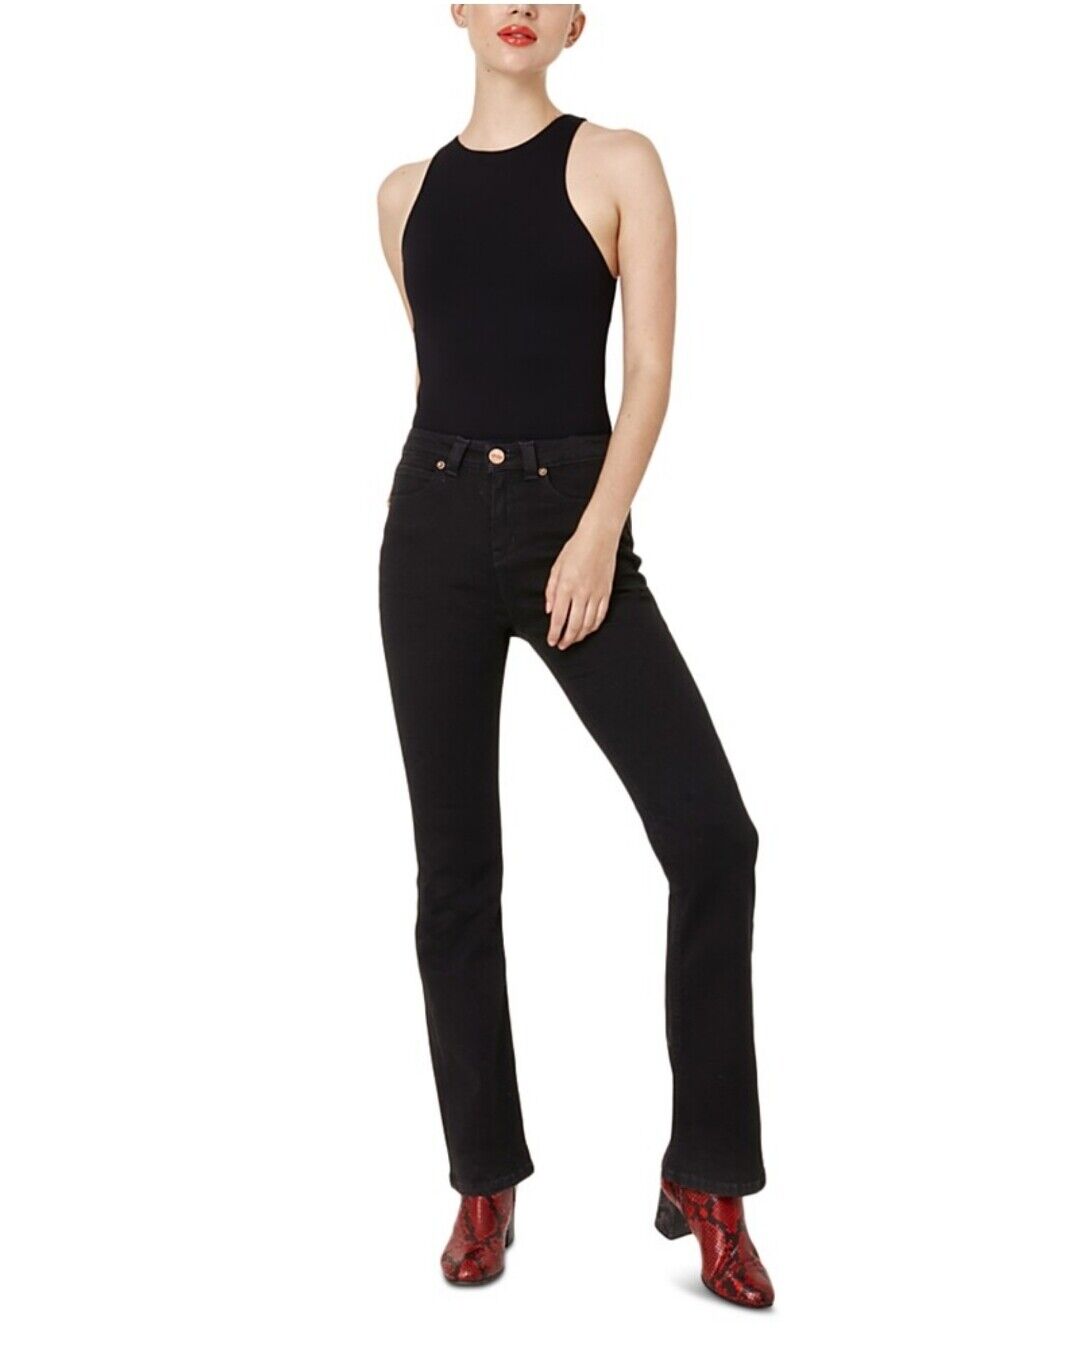 JAEN Women's Aiden High-Rise Black Stretch Flare Jeans Pockets Zip Size 28